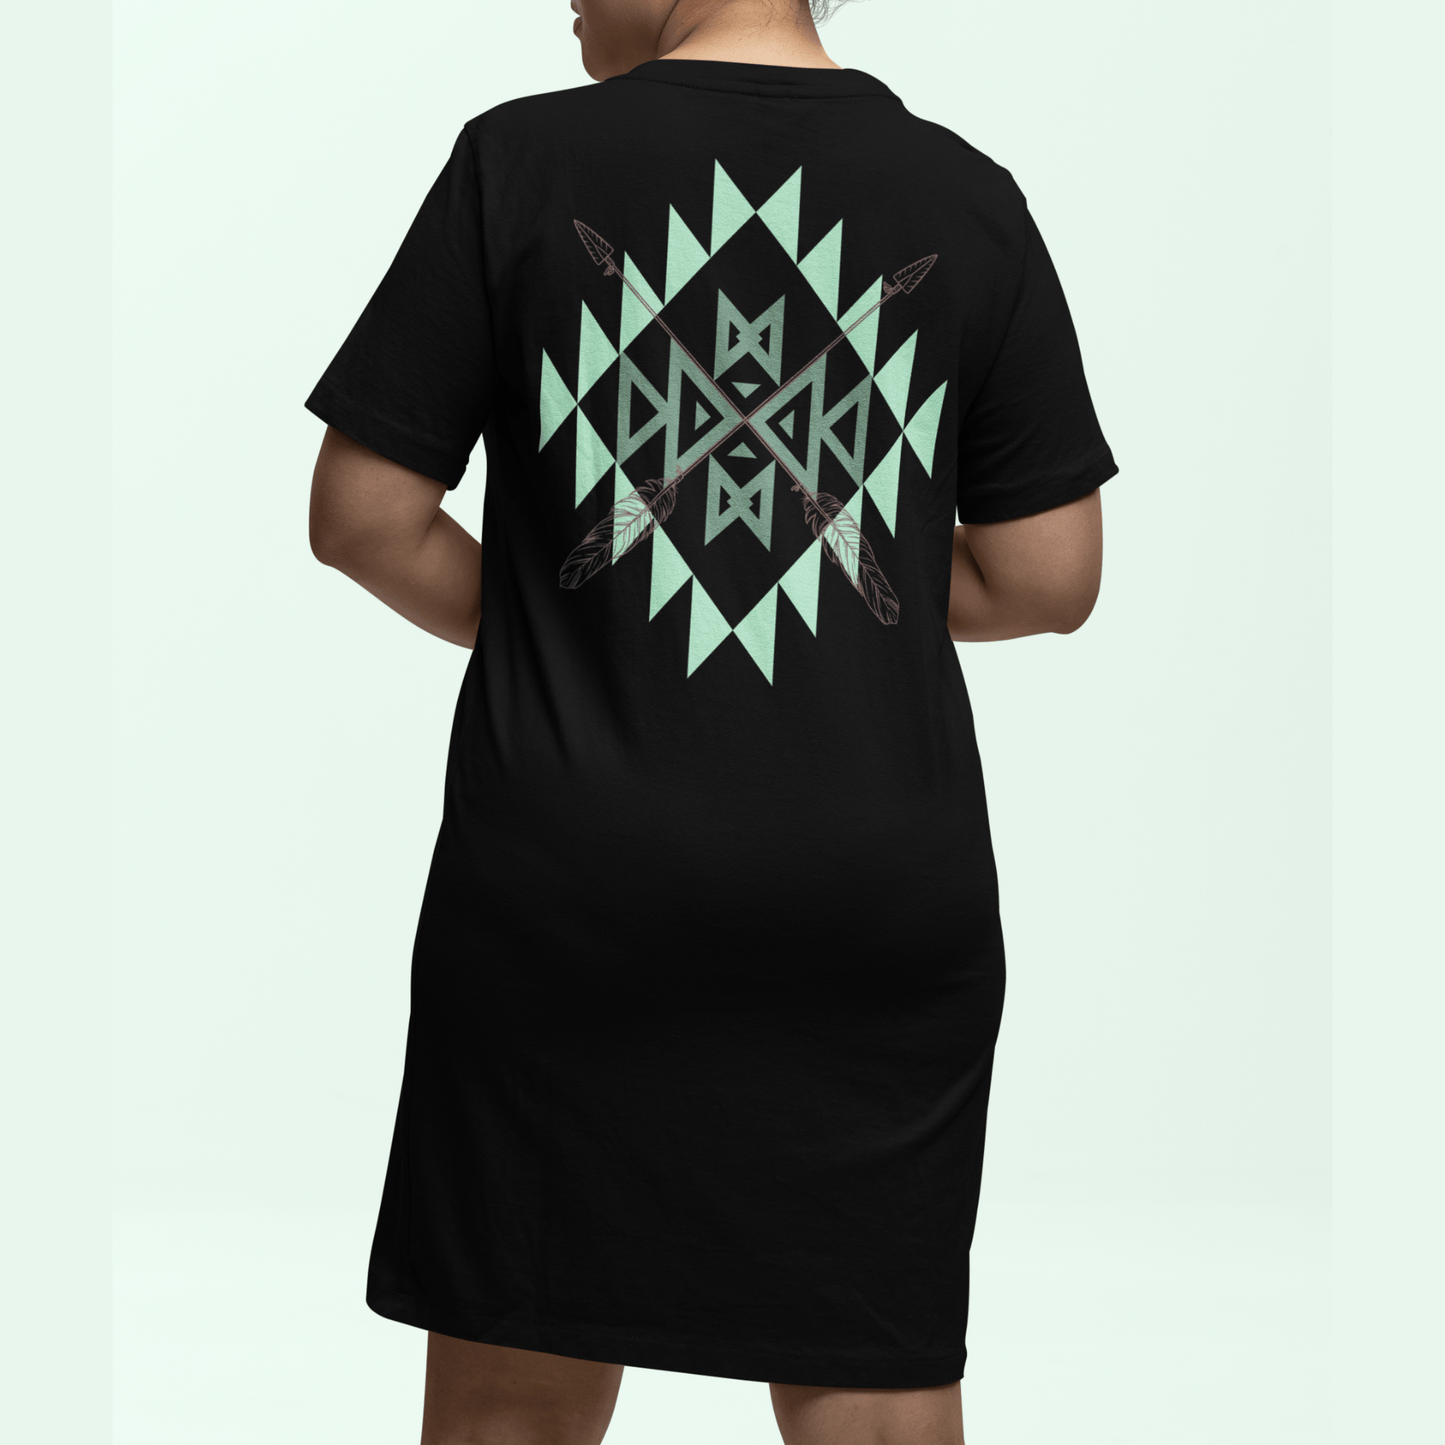 Native Pride Organic T-Shirt Dress - Nikikw Designs